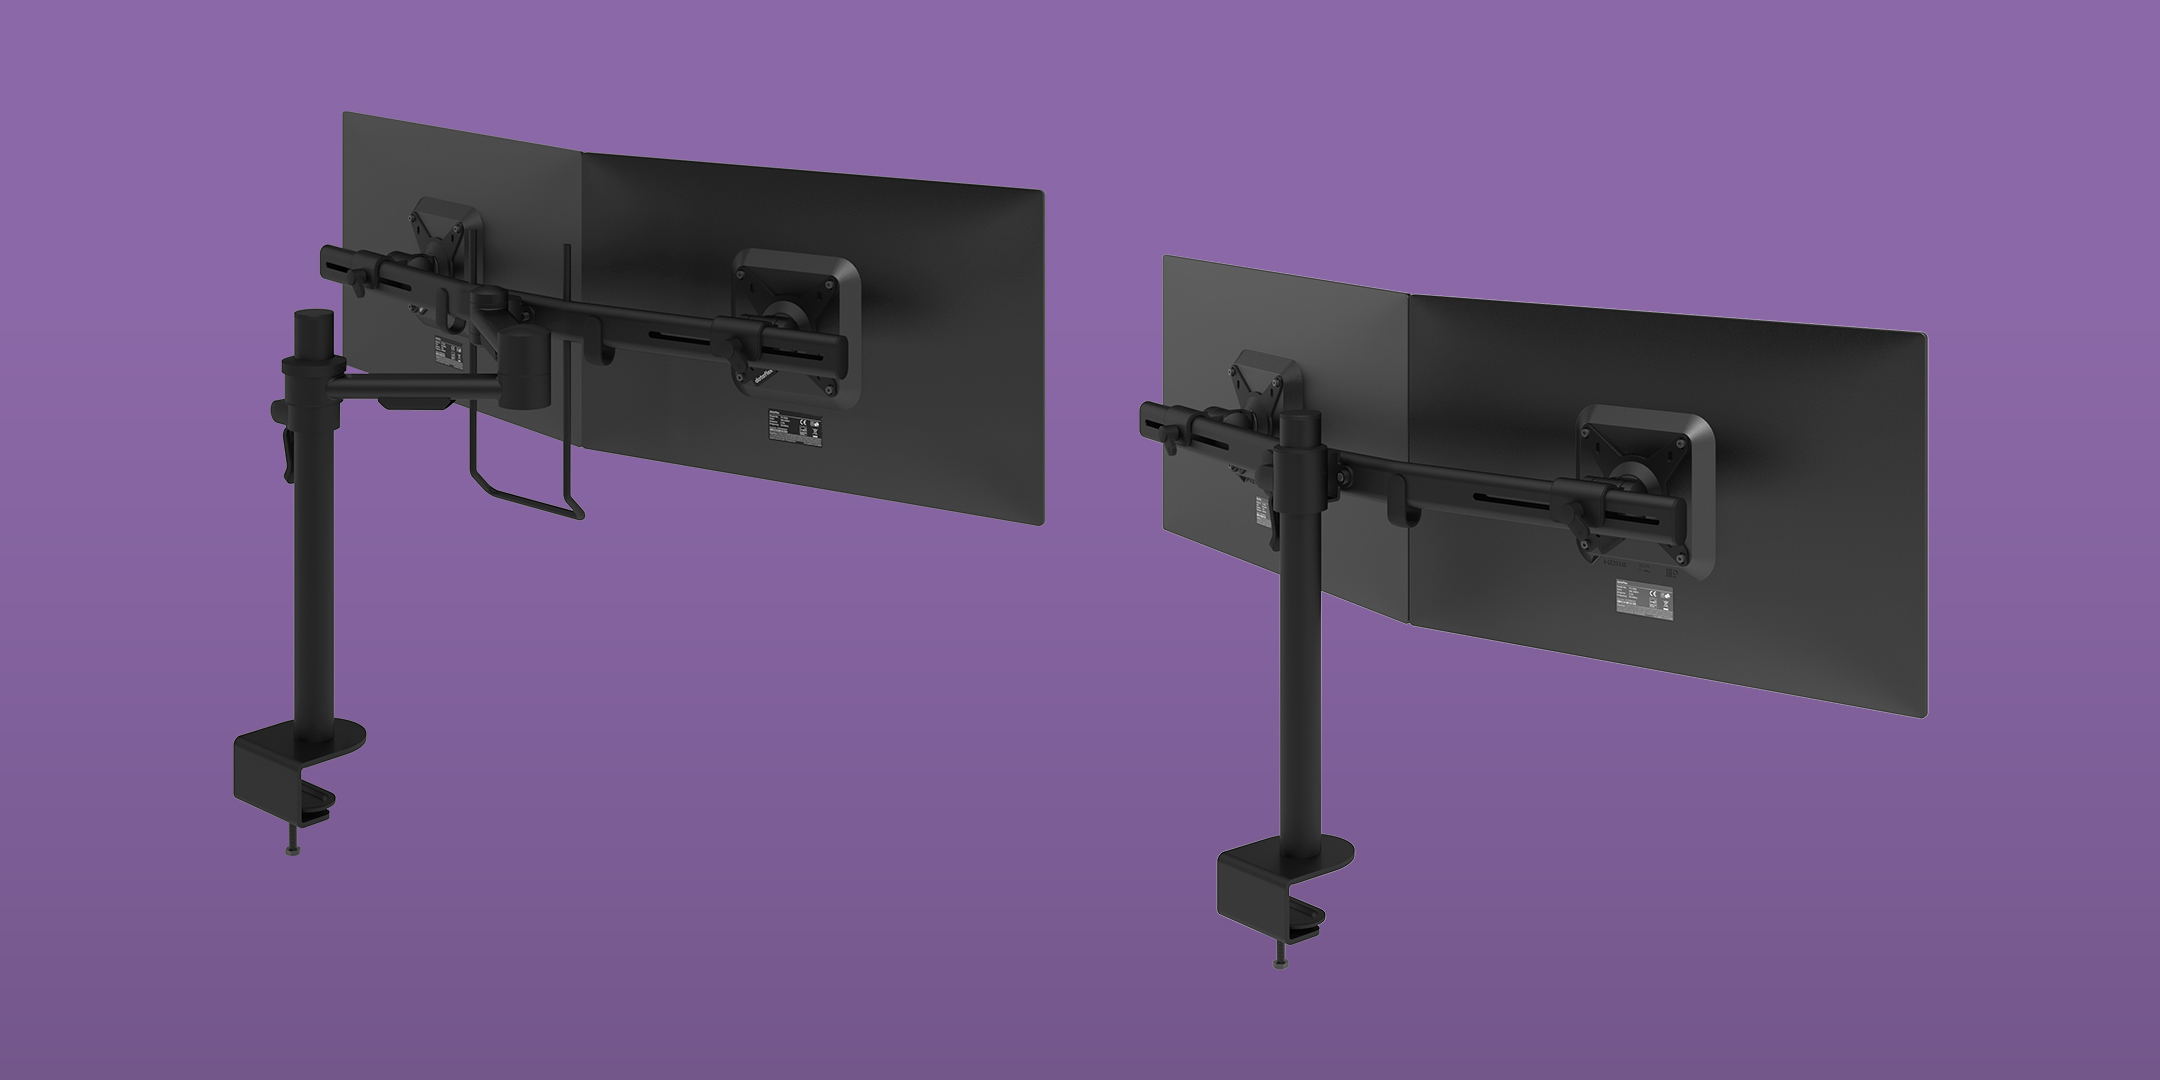 Dataflex Viewmate dual desk monitor mount 52.602, silver